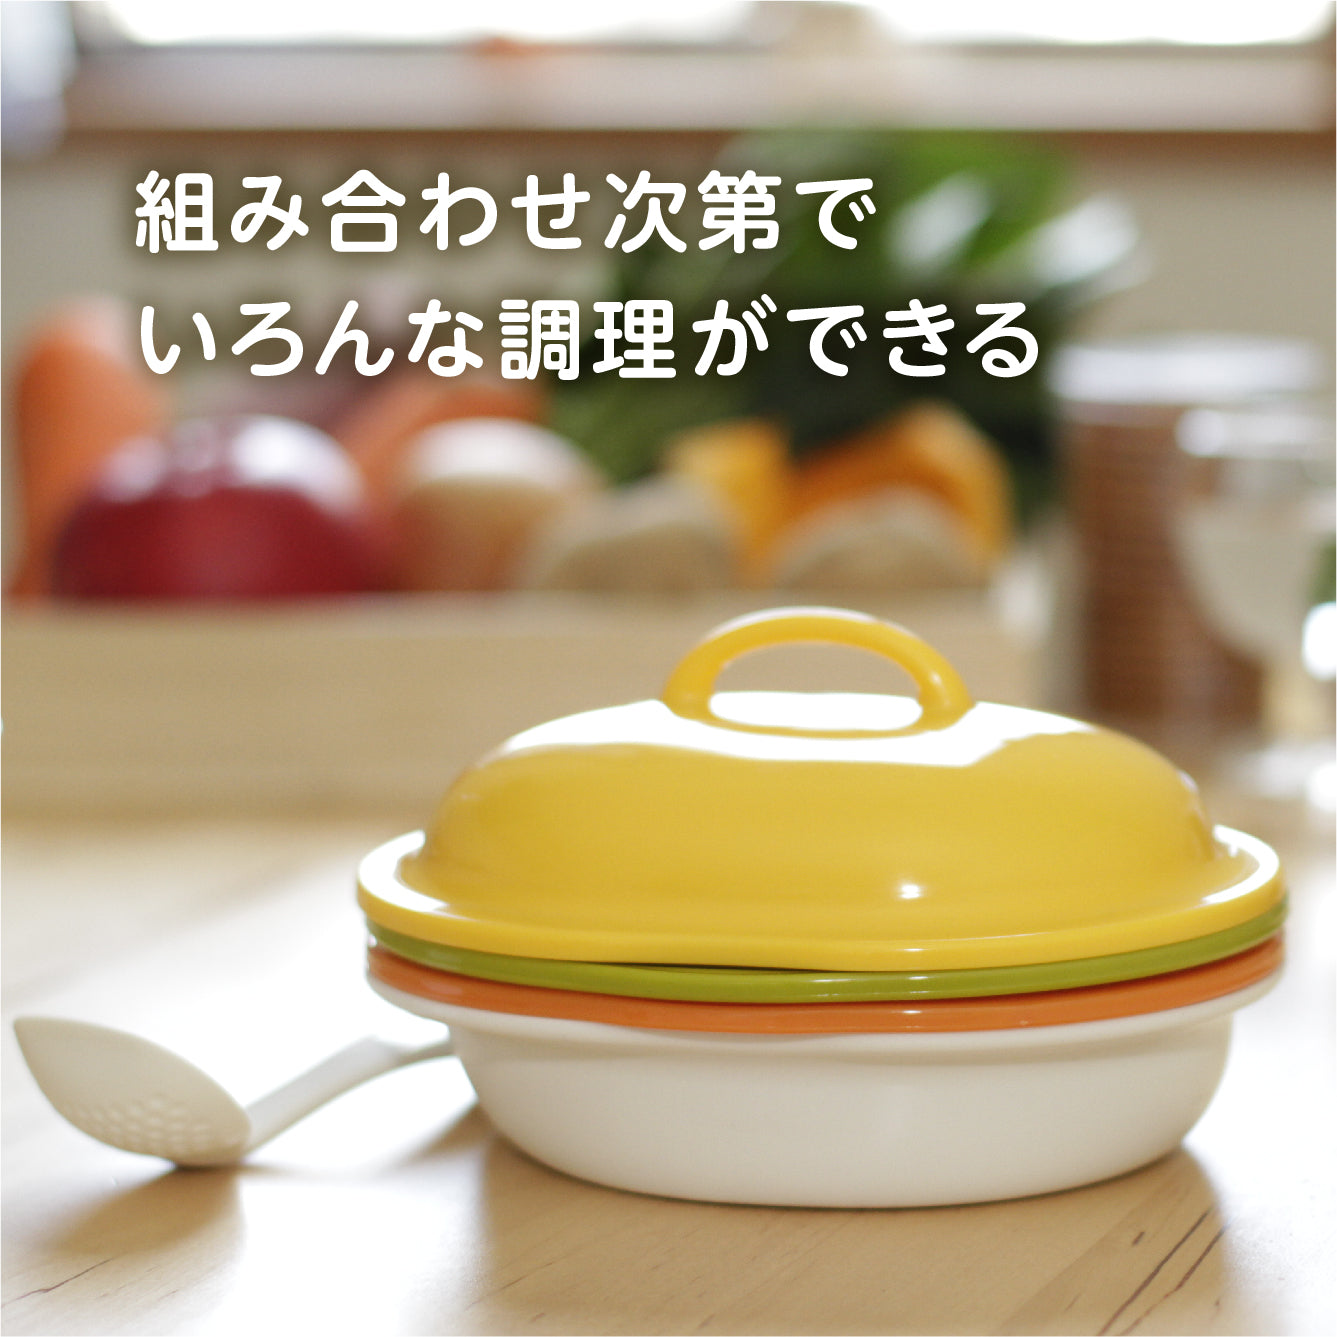 EDISONmama 媽媽煮飯輔食調理套裝 1套 日本製造